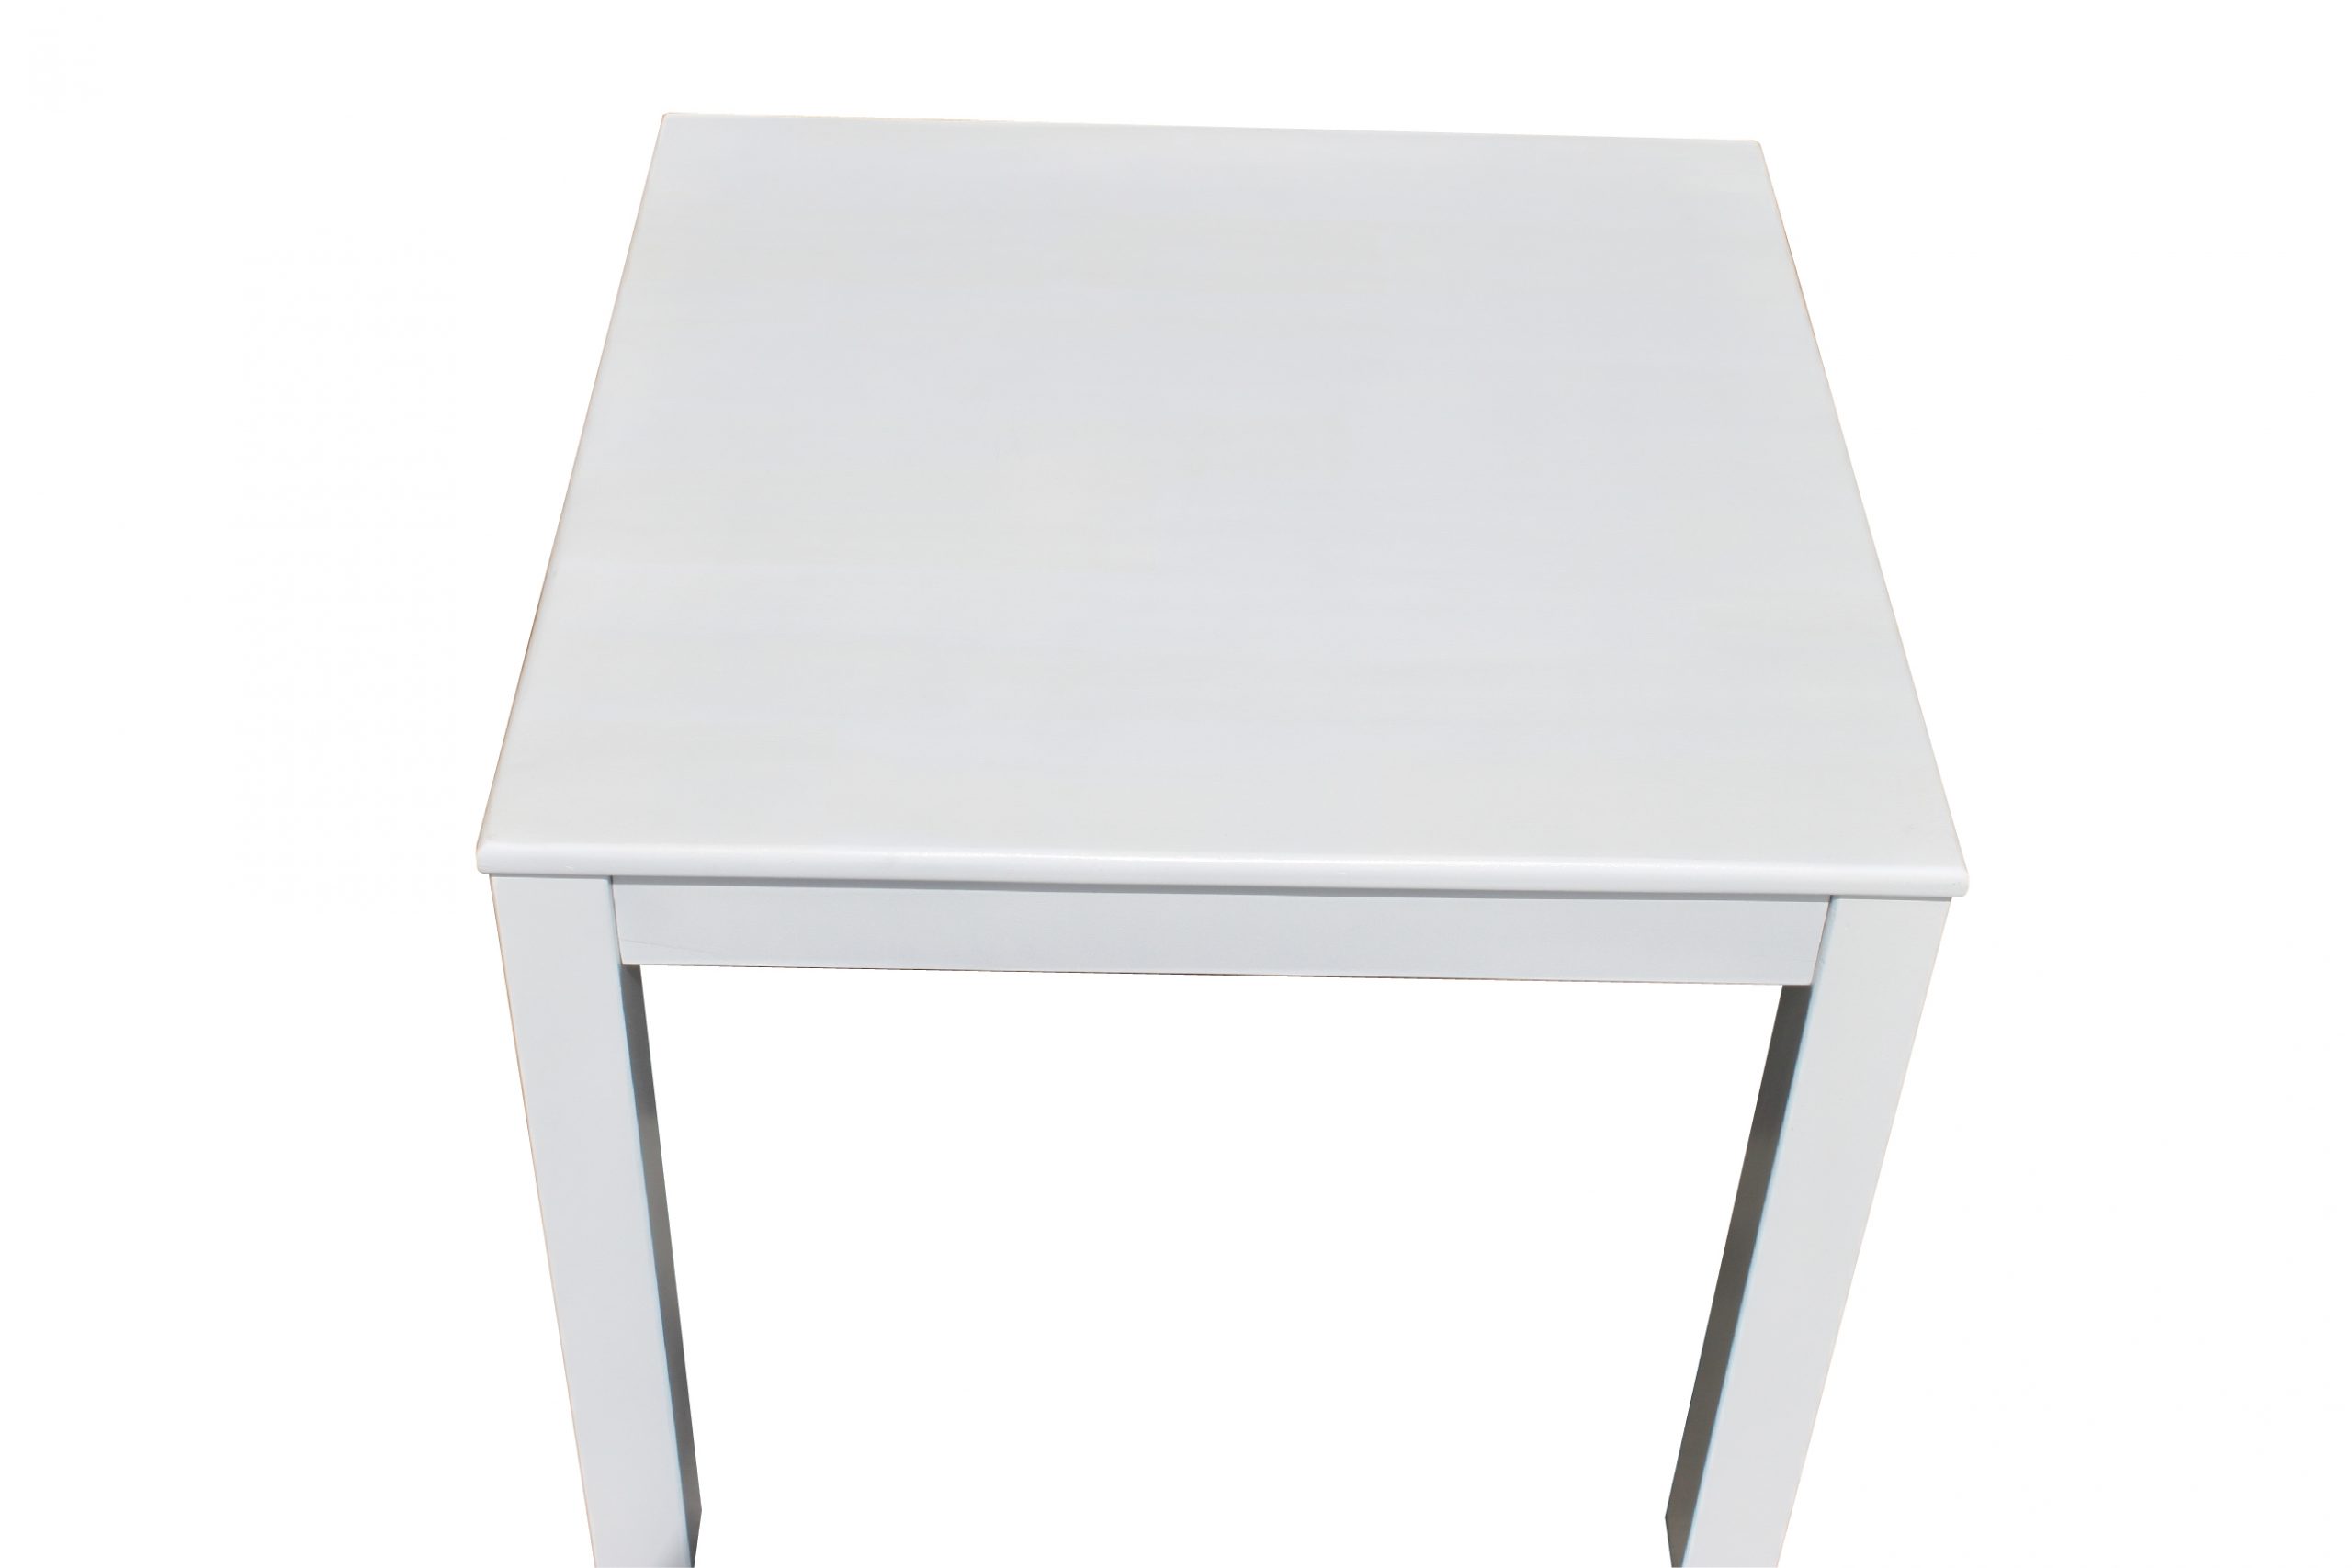 Standard Table White